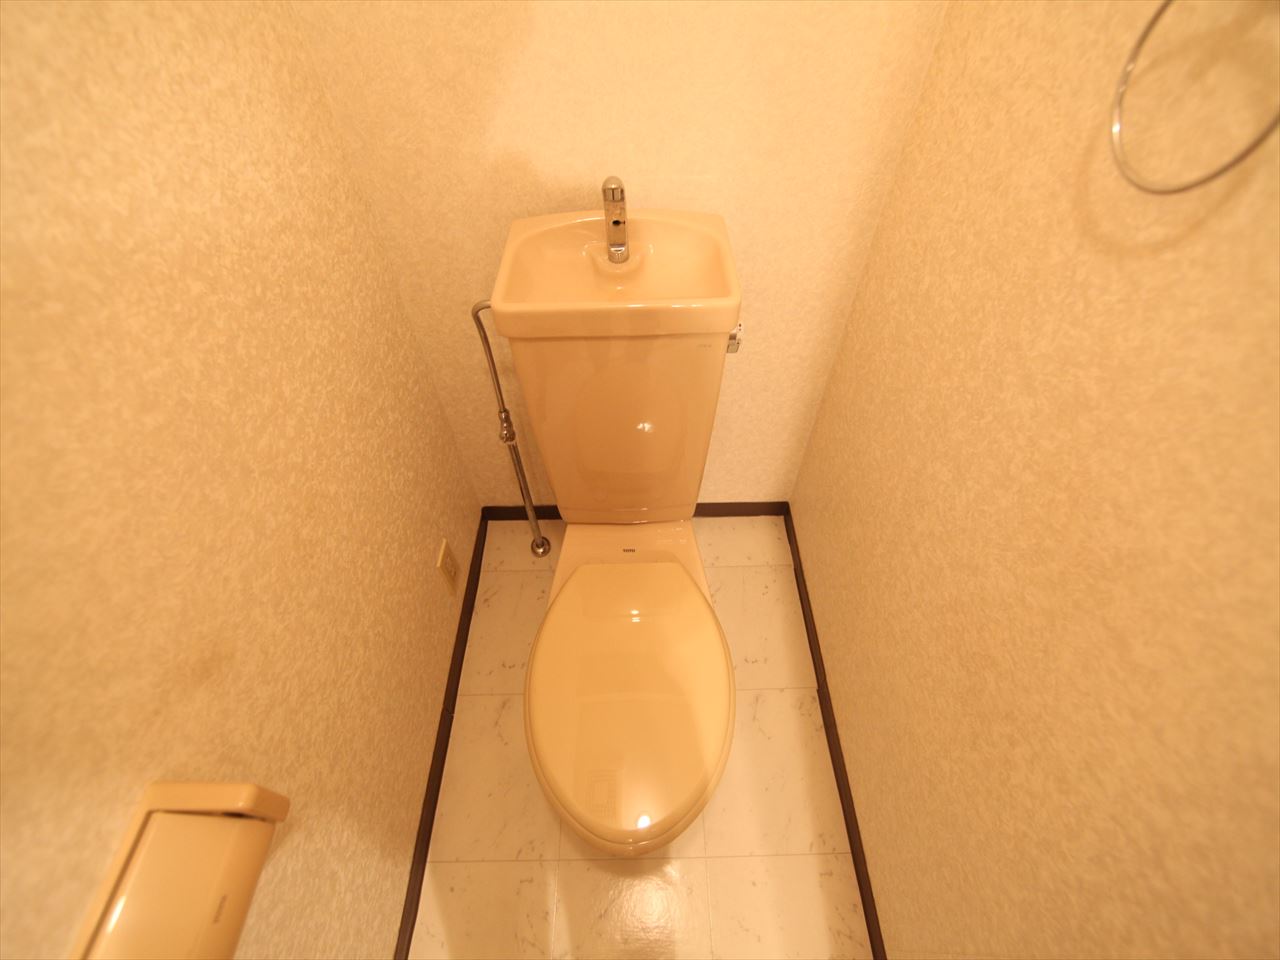 Toilet. toilet Warm water washing toilet seat mounting Allowed